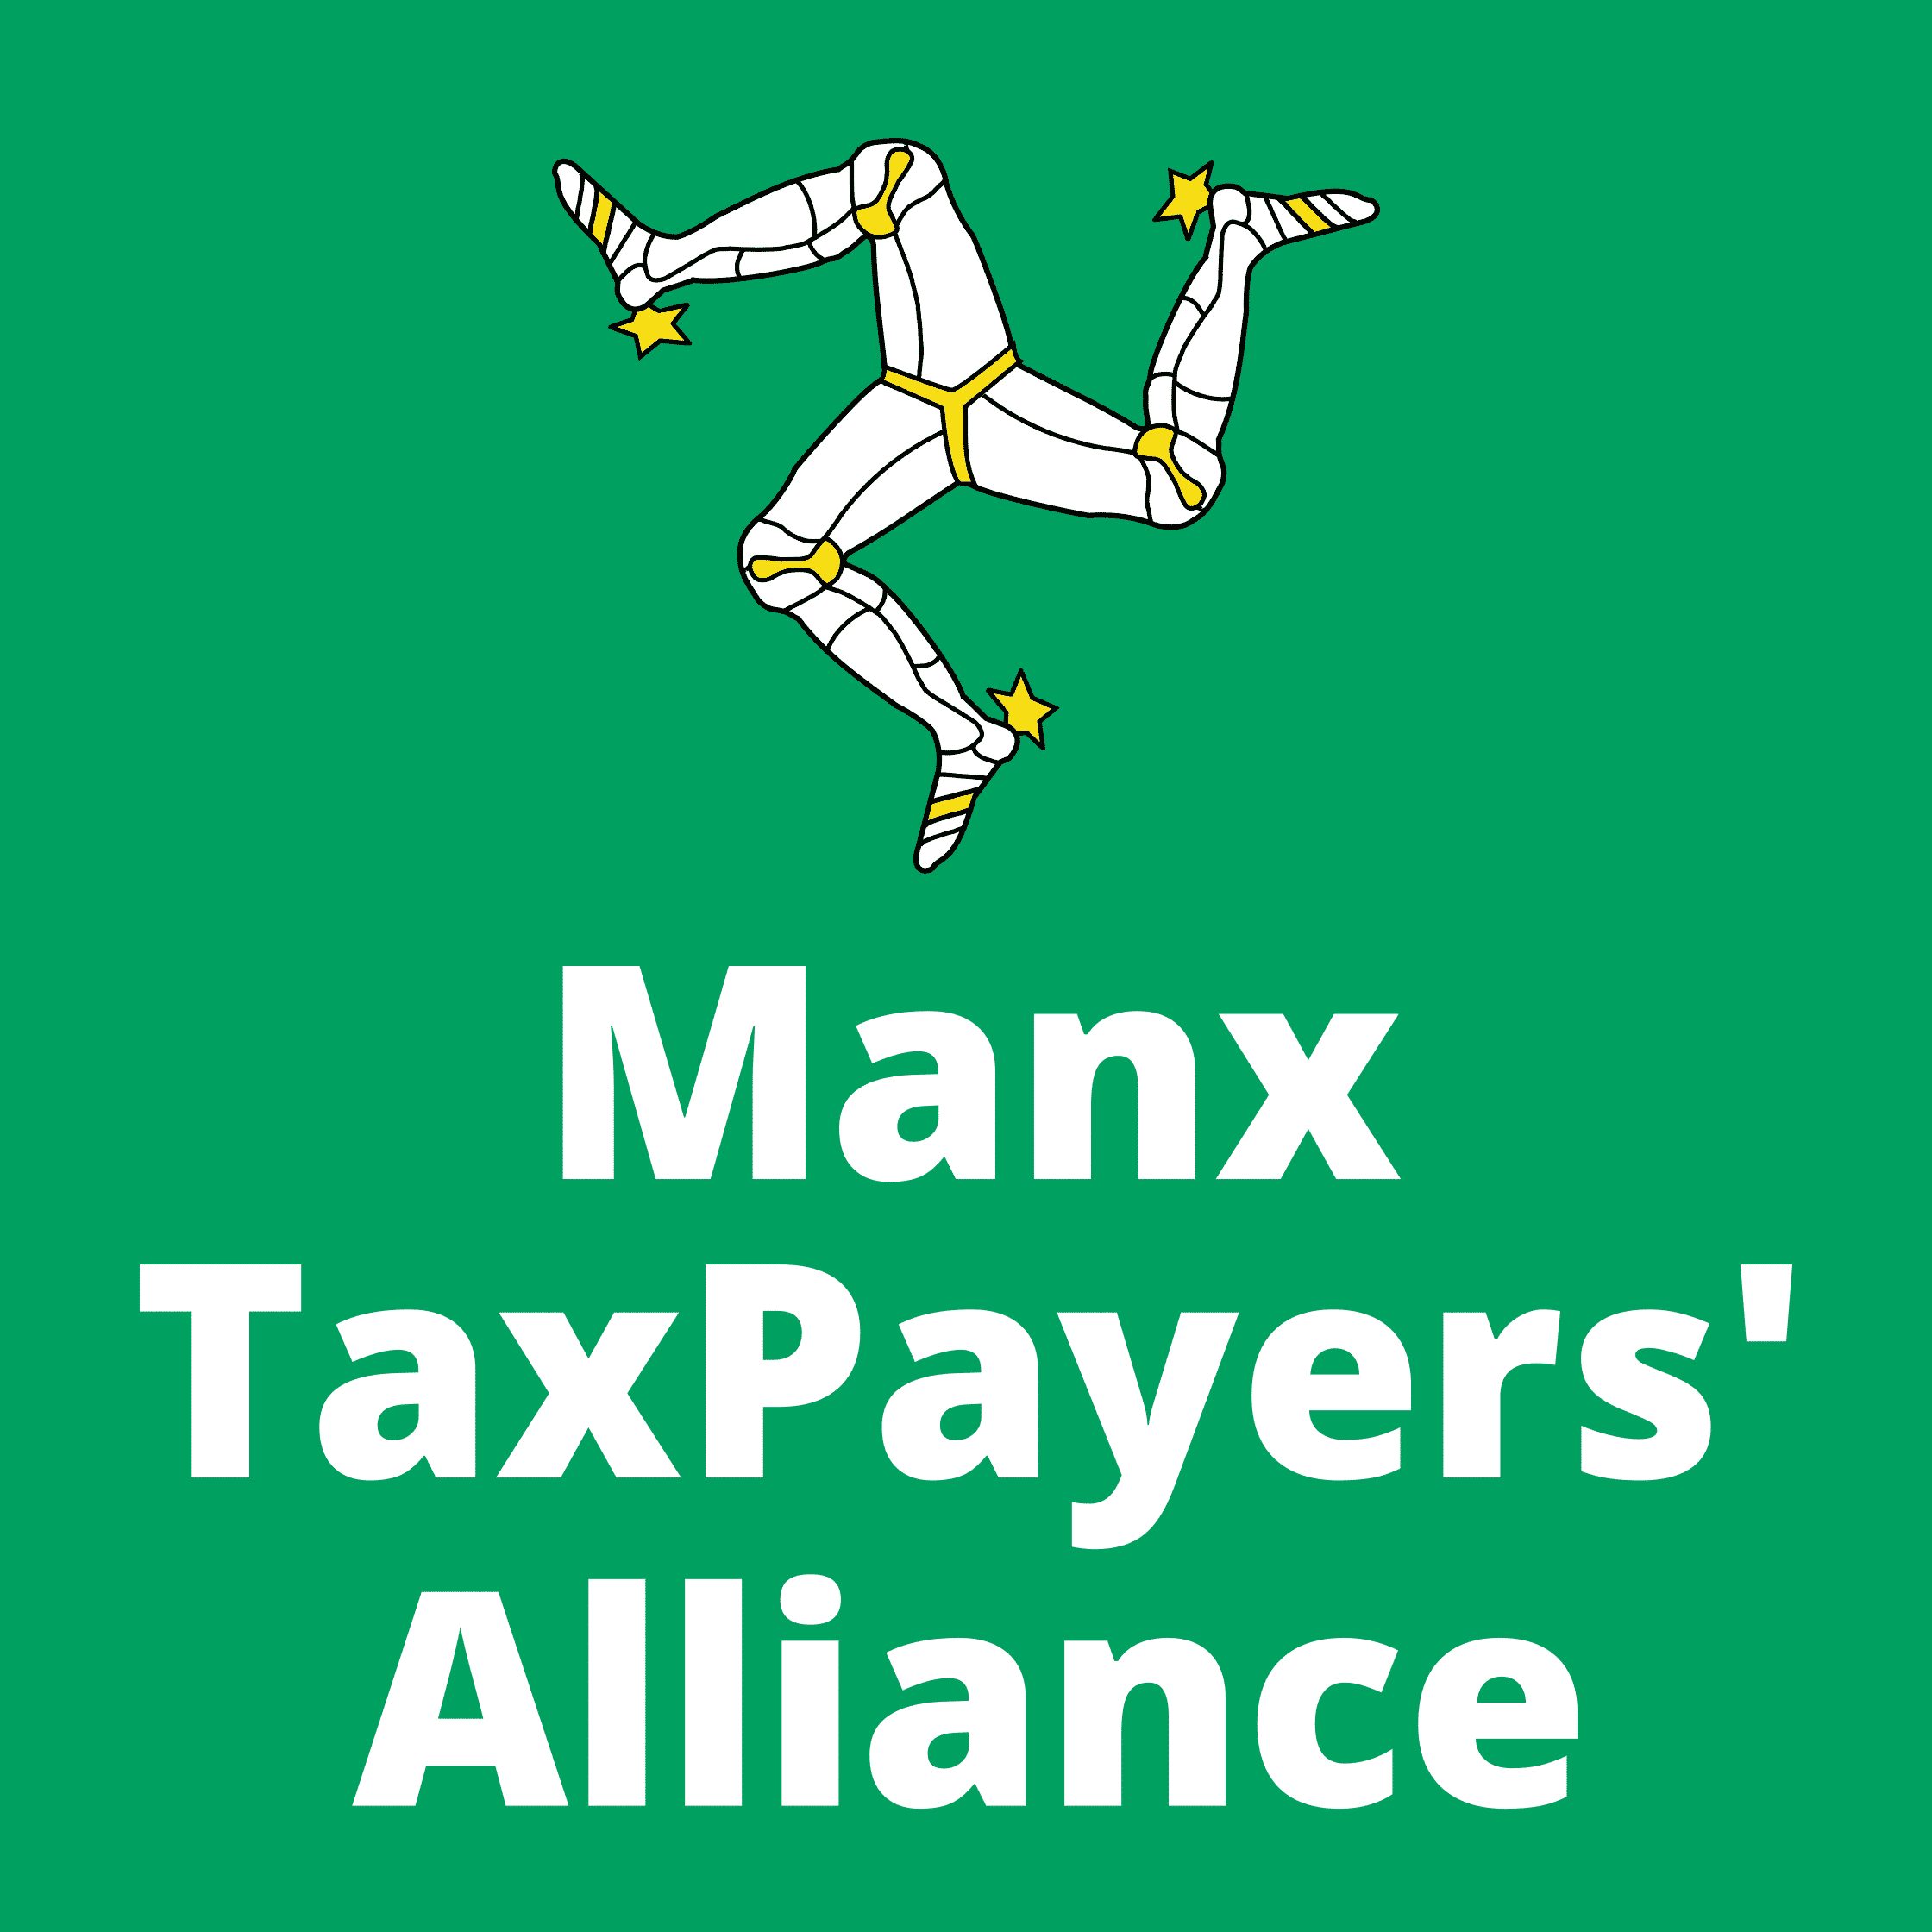 Manx TaxPayers Alliance Logo - Square - Colour